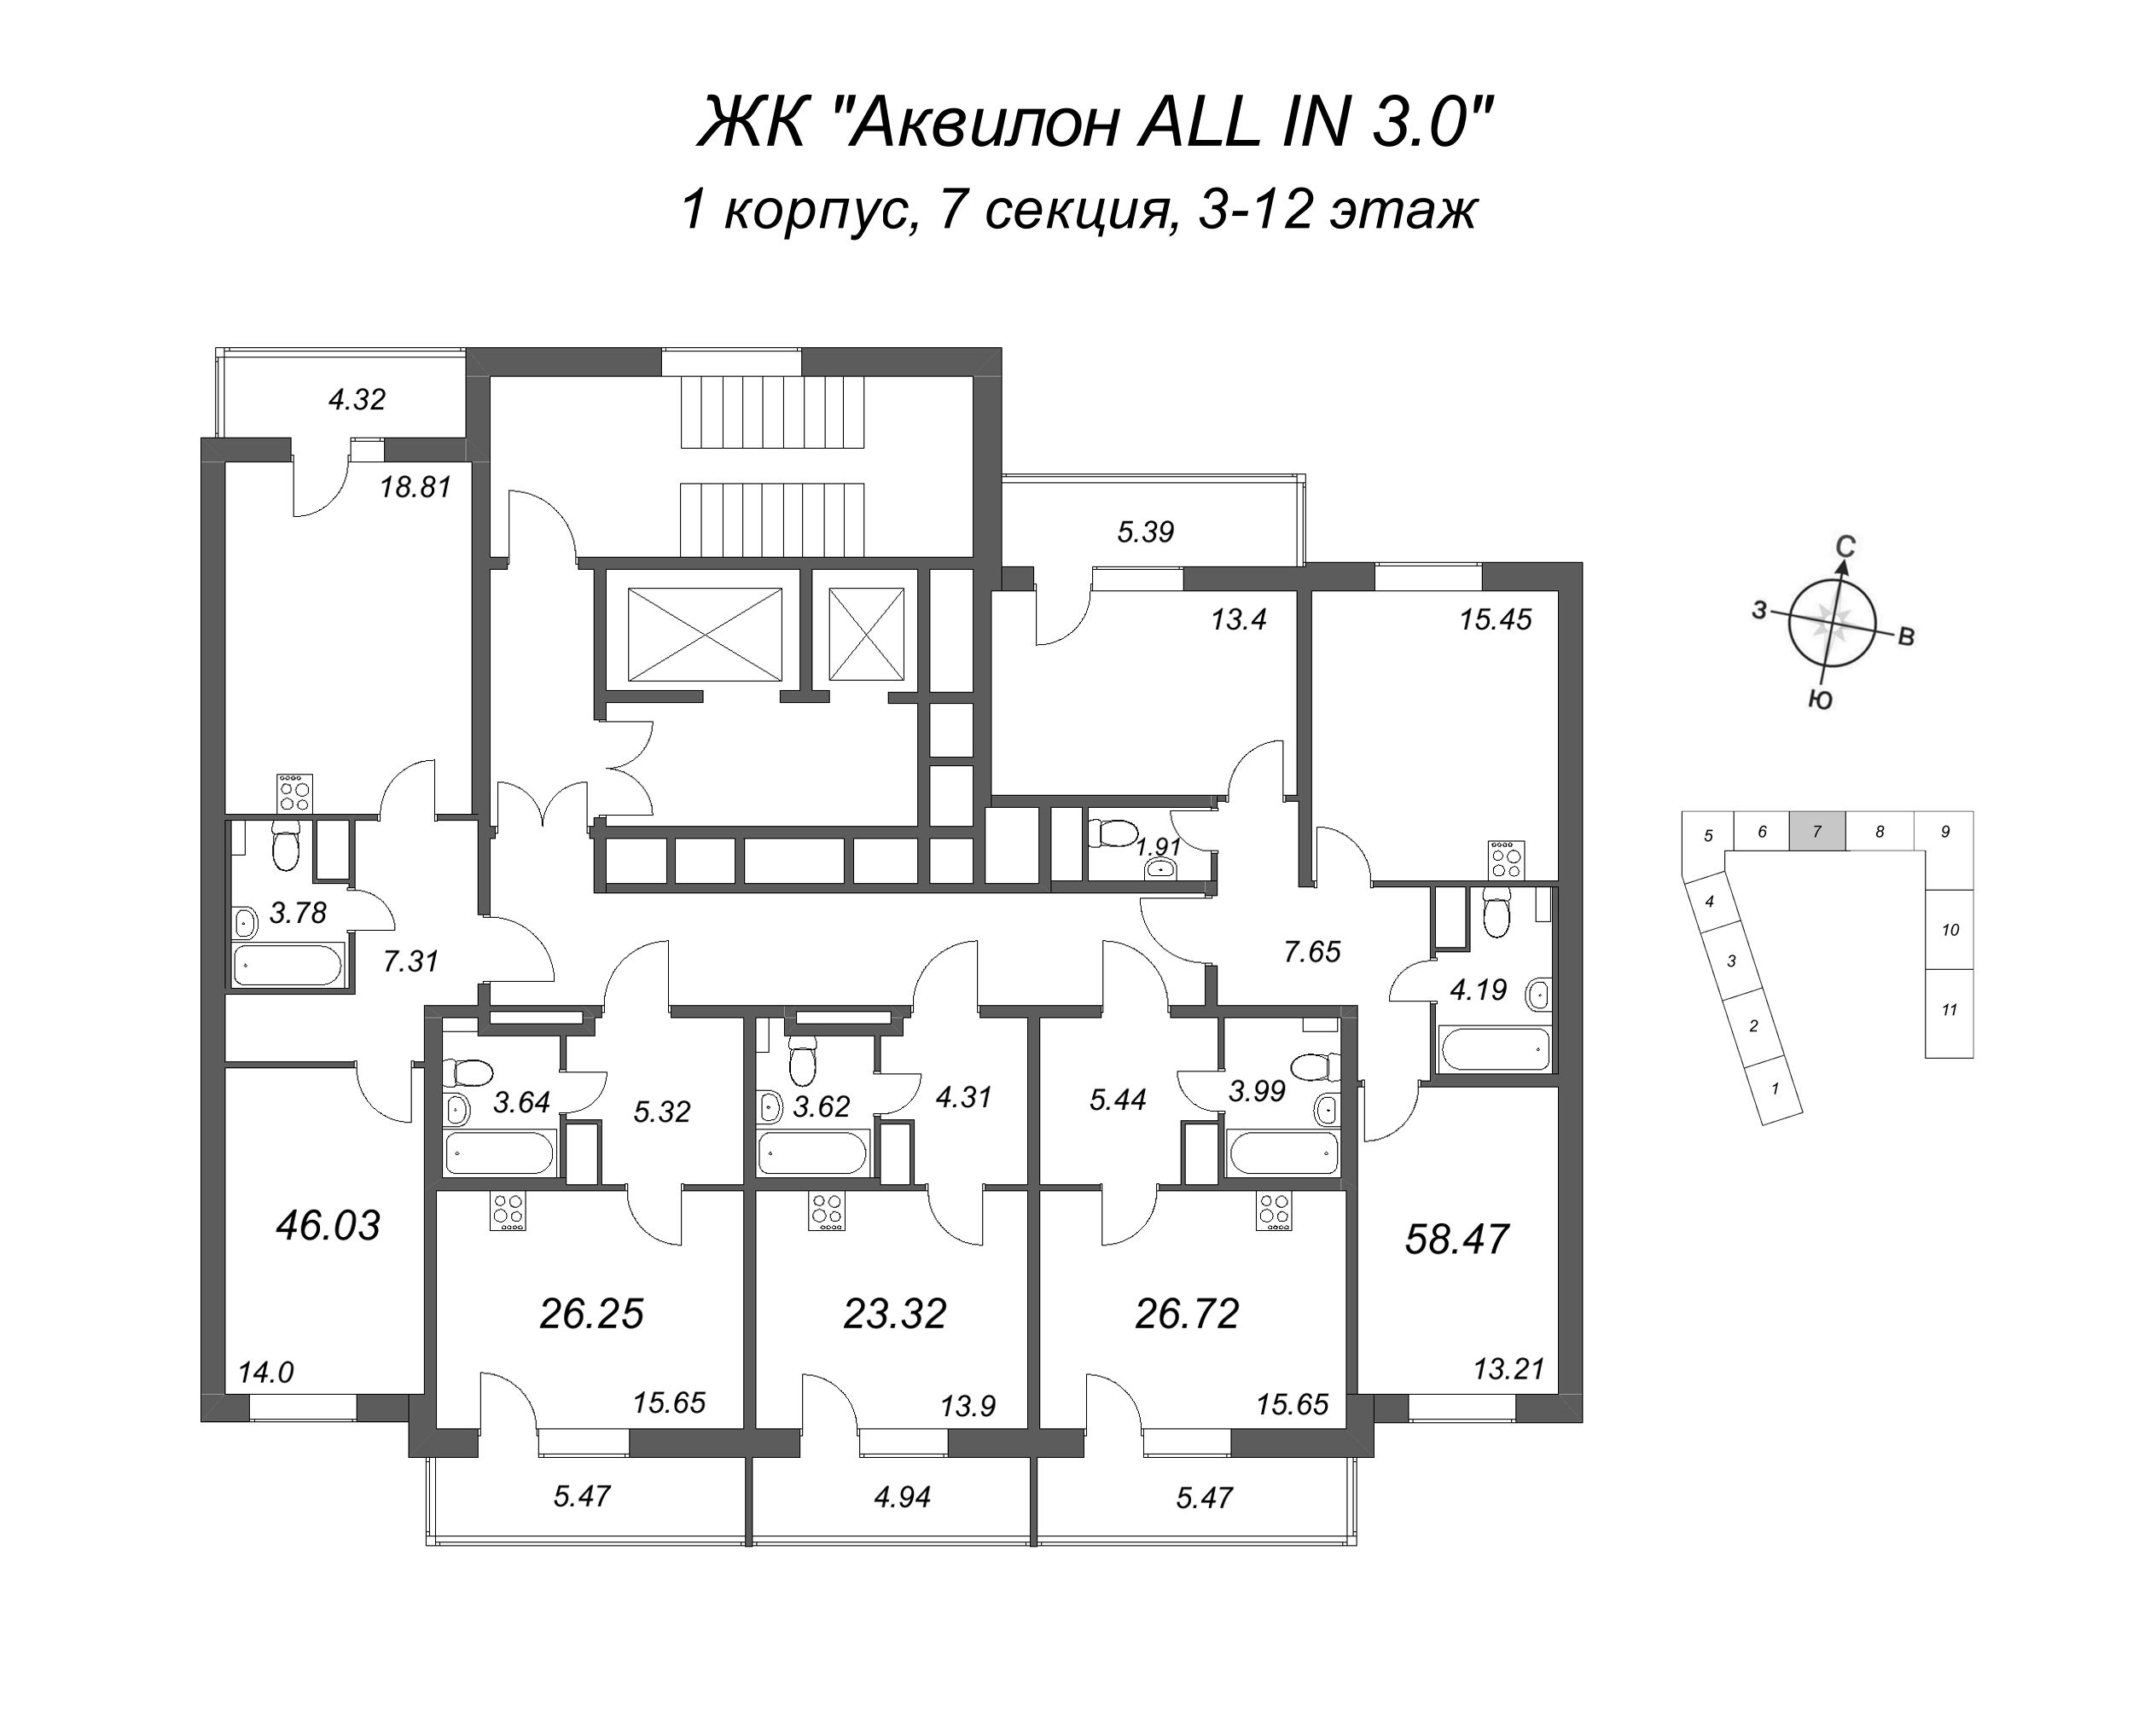 3-комнатная (Евро) квартира, 58.47 м² - планировка этажа